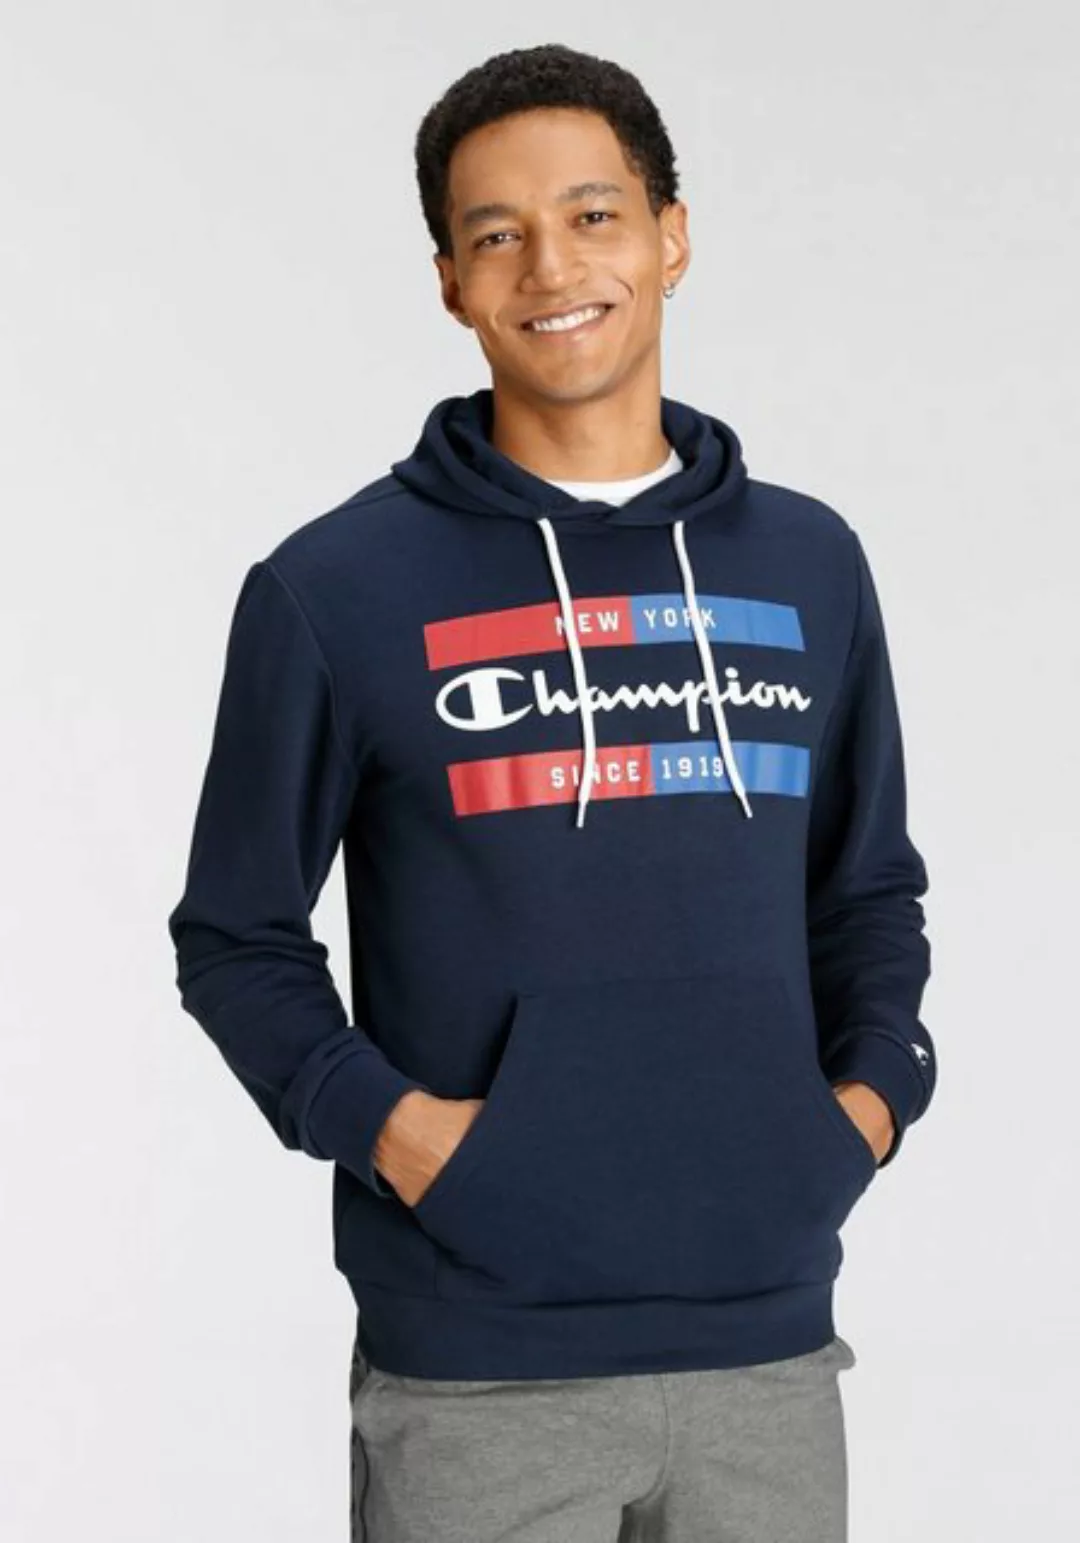 Champion Kapuzensweatshirt Hooded Sweatshirt günstig online kaufen